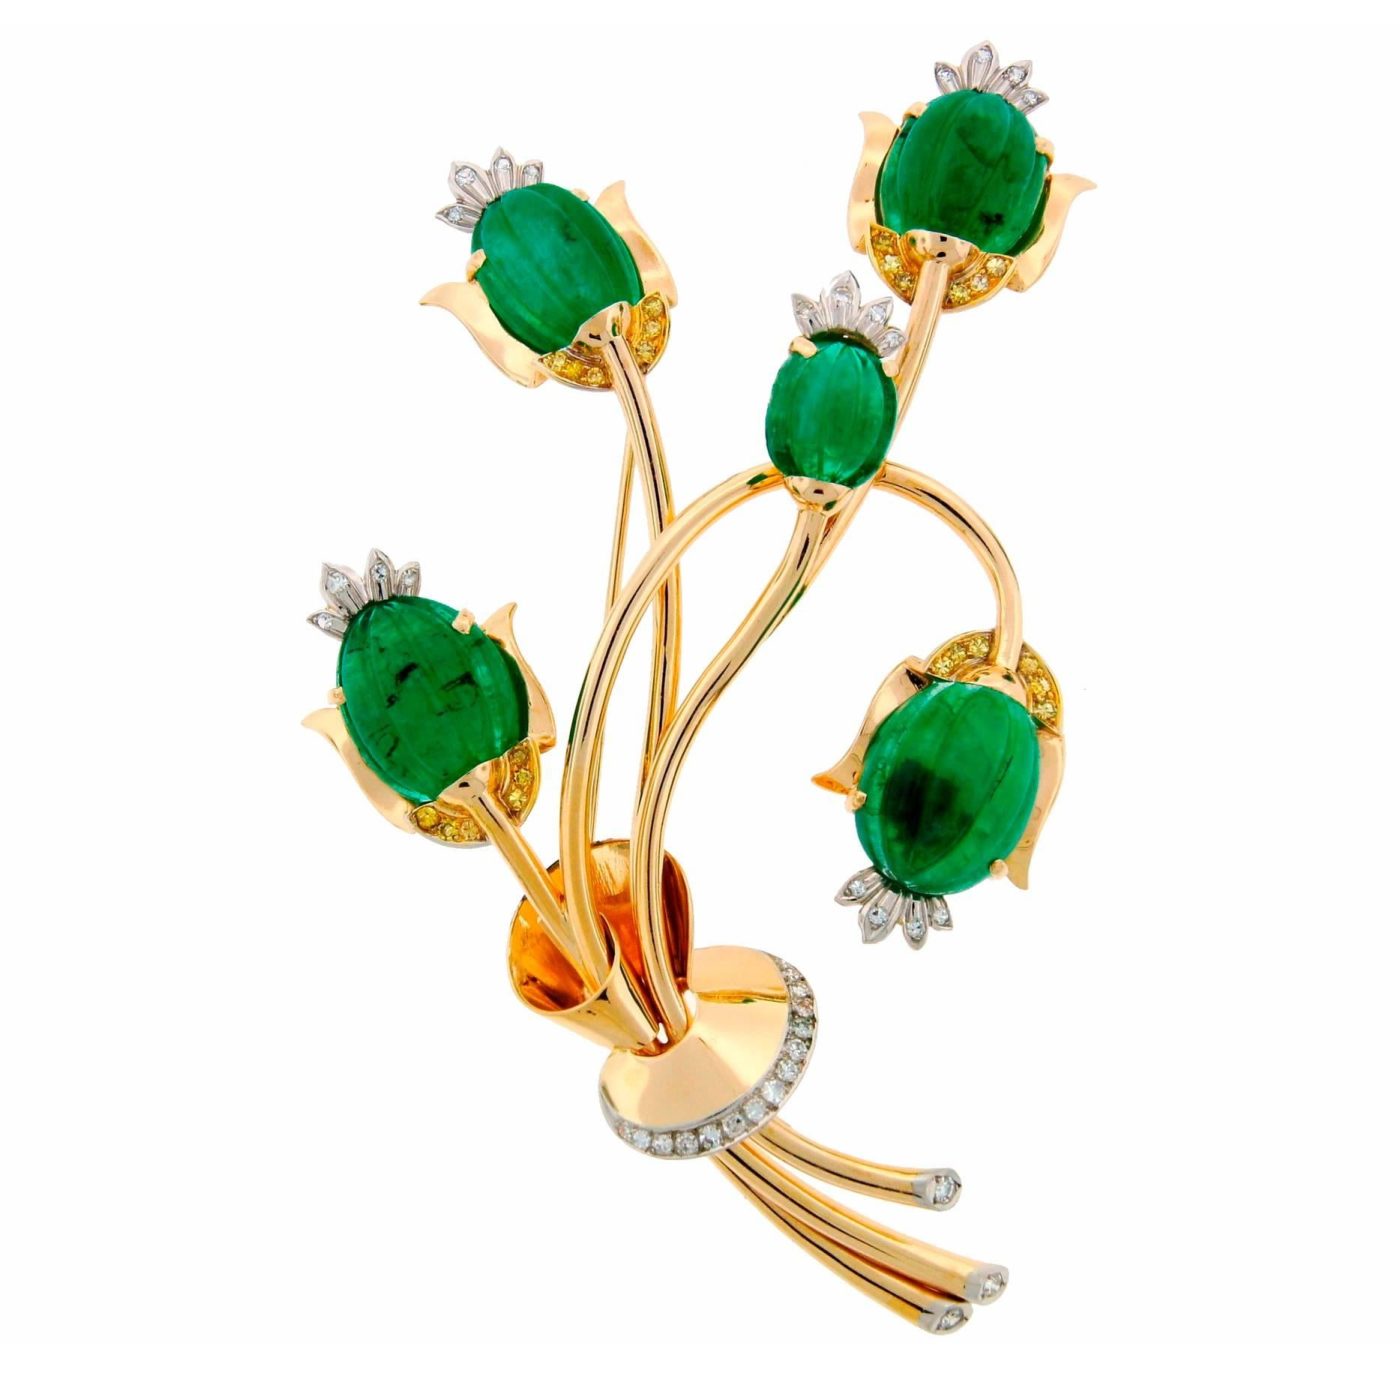 Trabert & Hoeffer-Mauboussin emerald and diamond brooch, 1940s